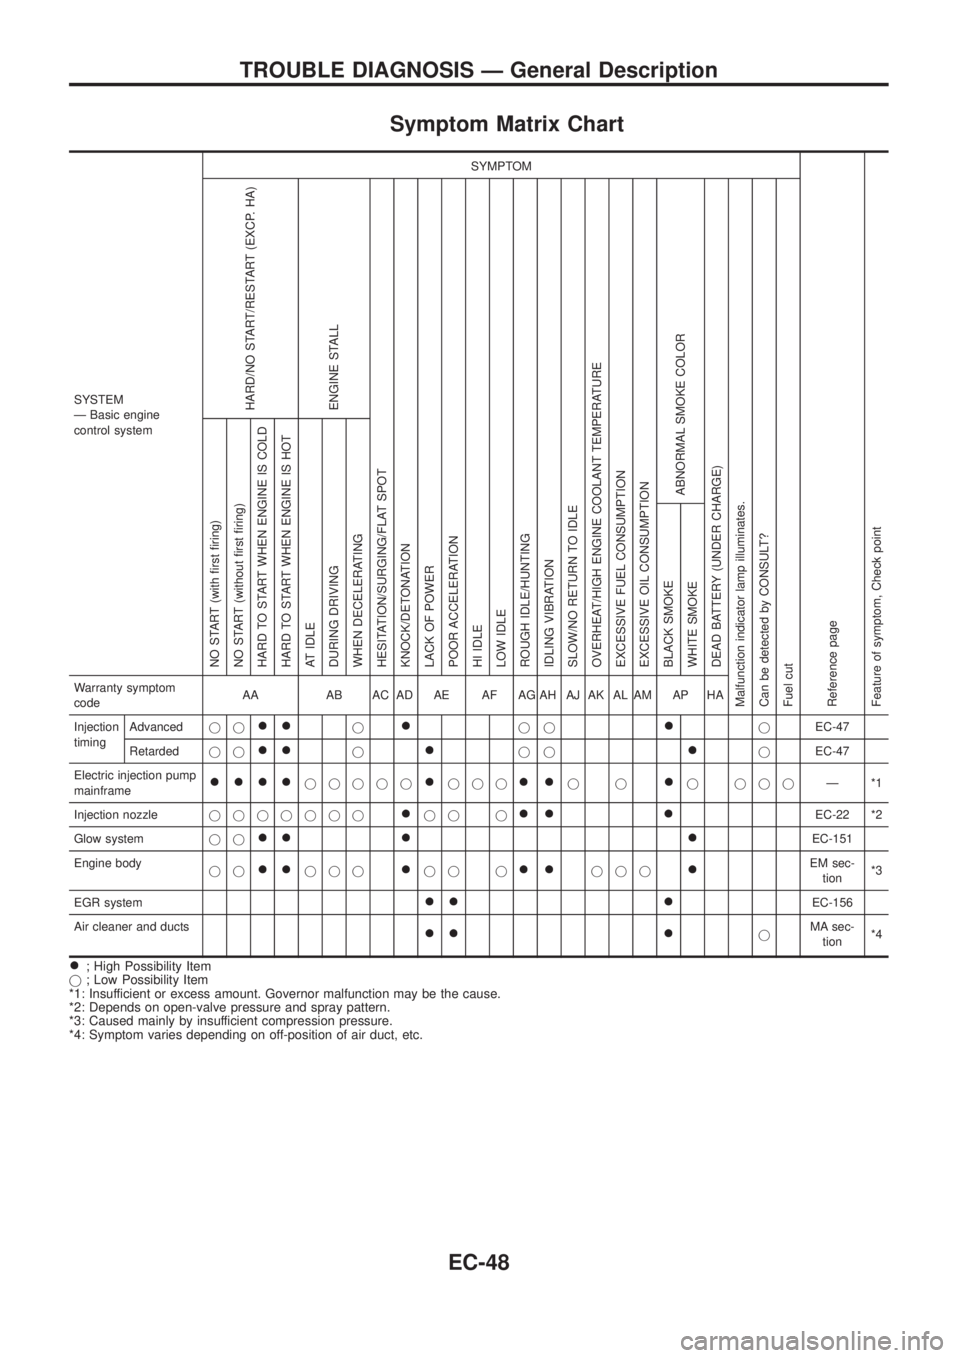 NISSAN PATROL 2006  Service Manual Symptom Matrix Chart
SYSTEM
Ð Basic engine
control systemSYMPTOM
Reference page
Feature of symptom, Check pointHARD/NO START/RESTART (EXCP. HA)
ENGINE STALL
HESITATION/SURGING/FLAT SPOT
KNOCK/DETONAT